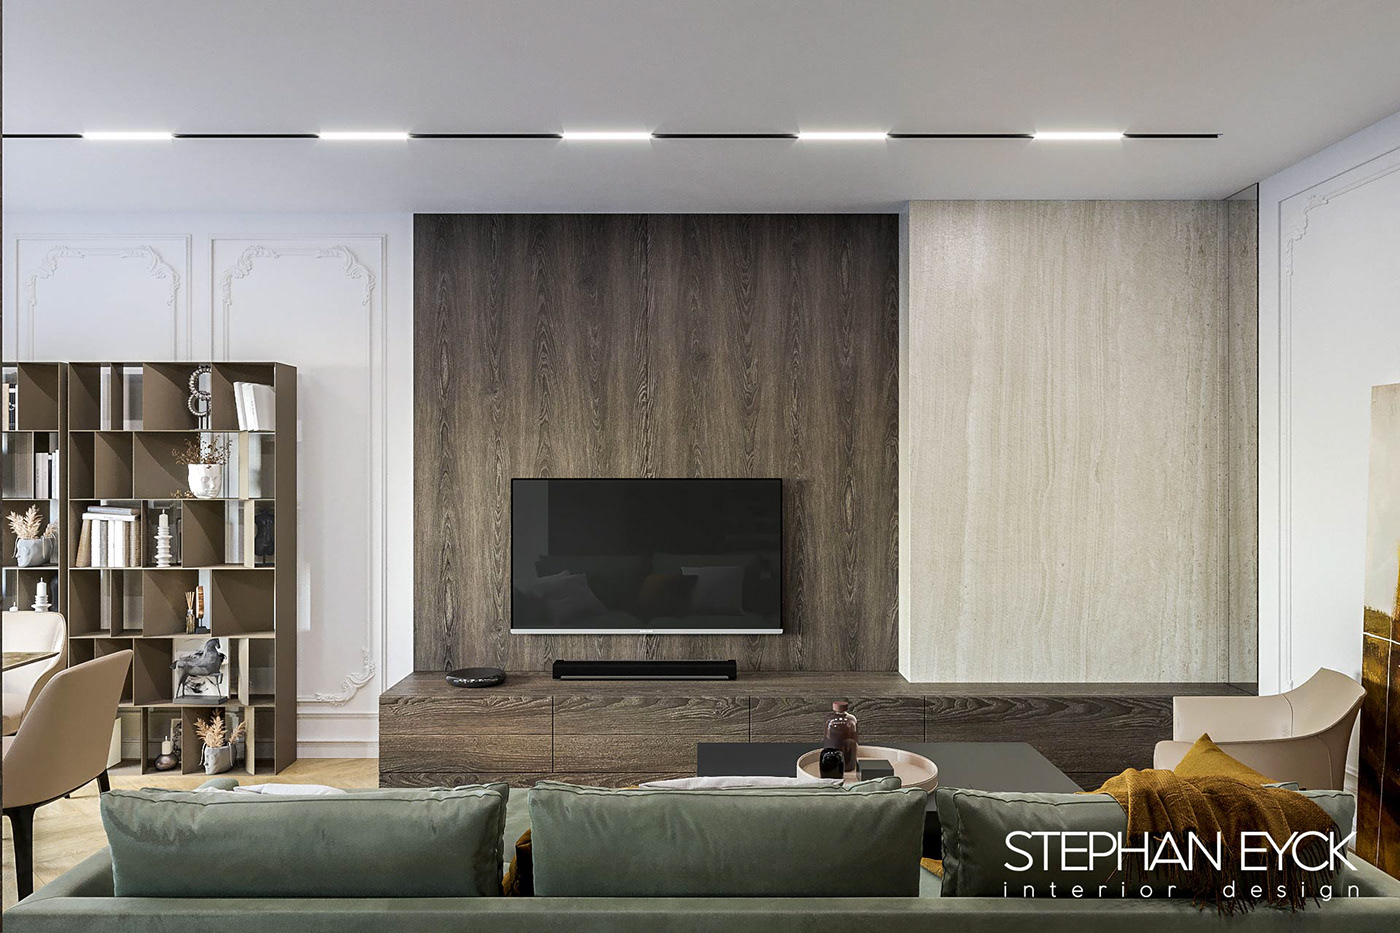 budapest corona render  design interior interior design  penthouse stephane eyck